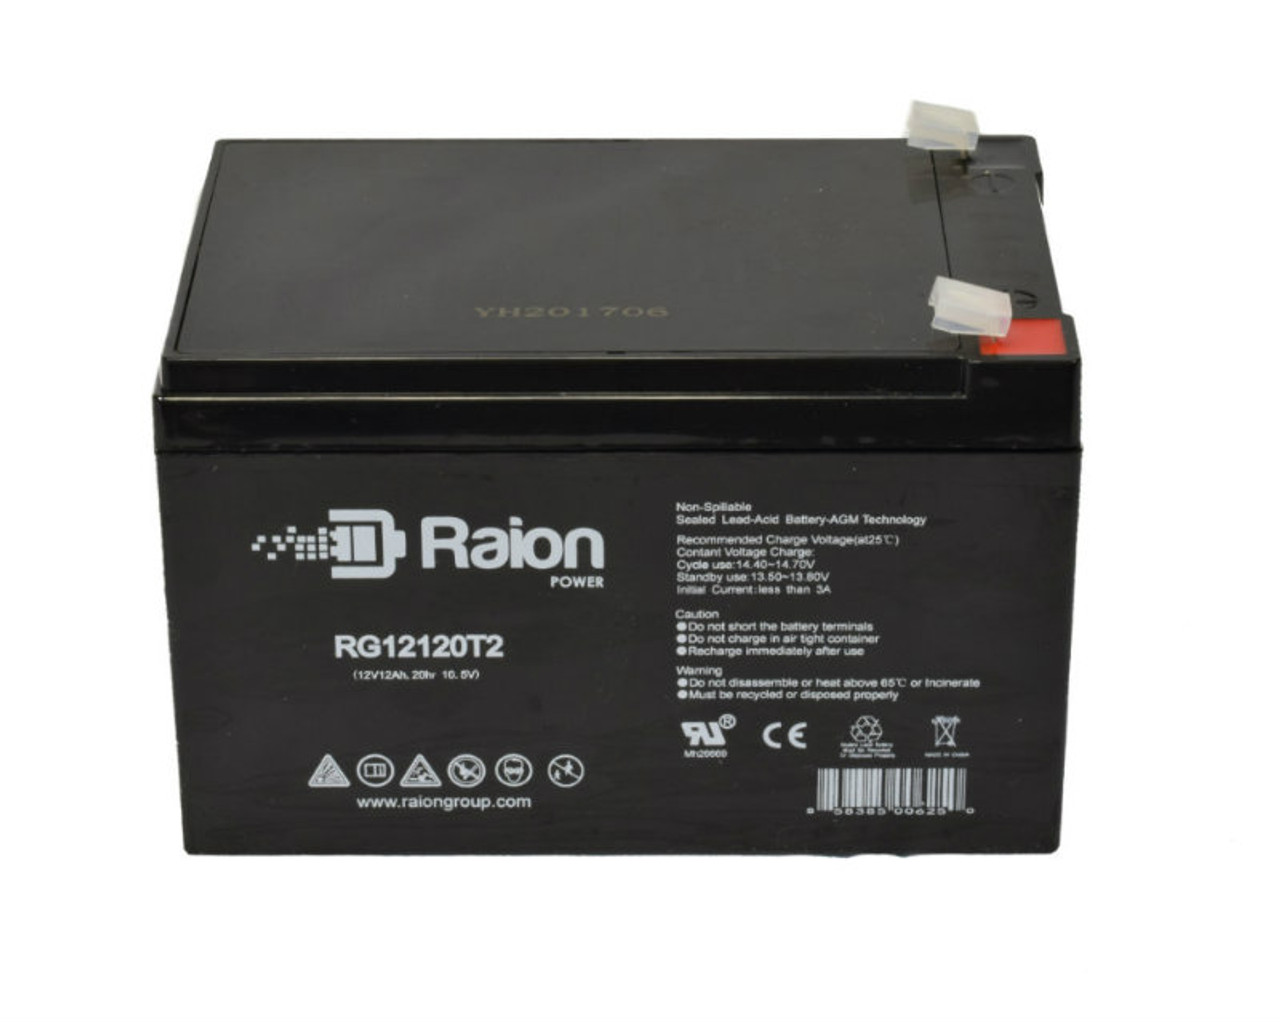 Raion Power RG12120T2 SLA Battery for Sonnenschein A512/10 SR